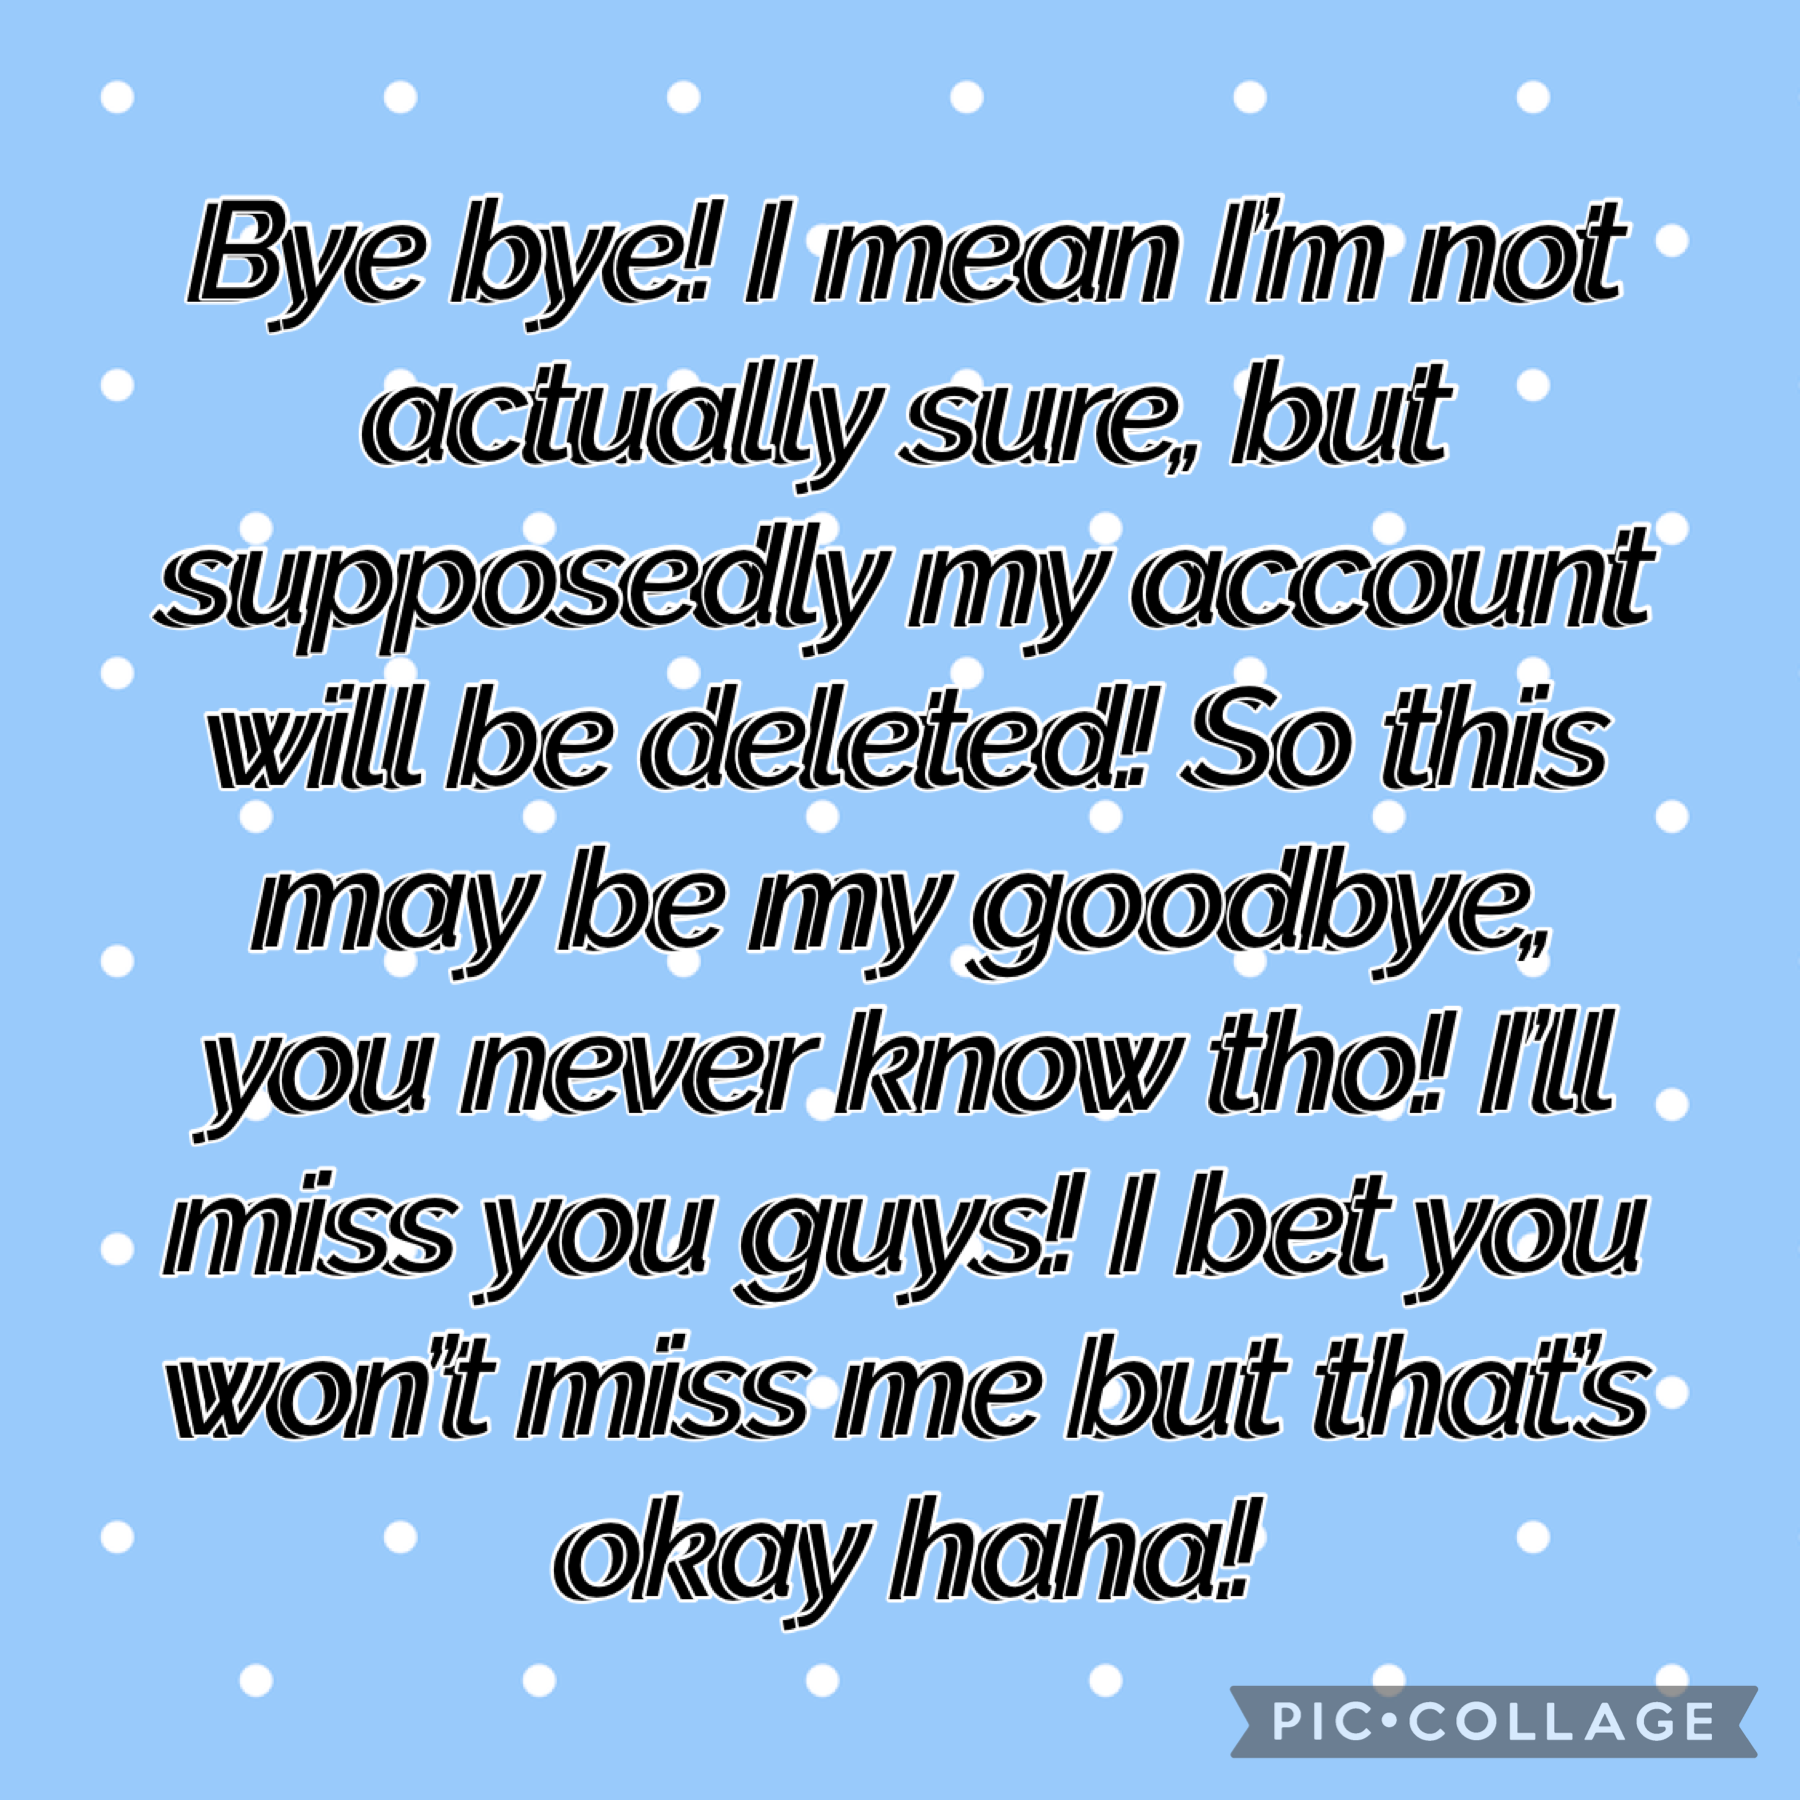 Bye bye maybe! 